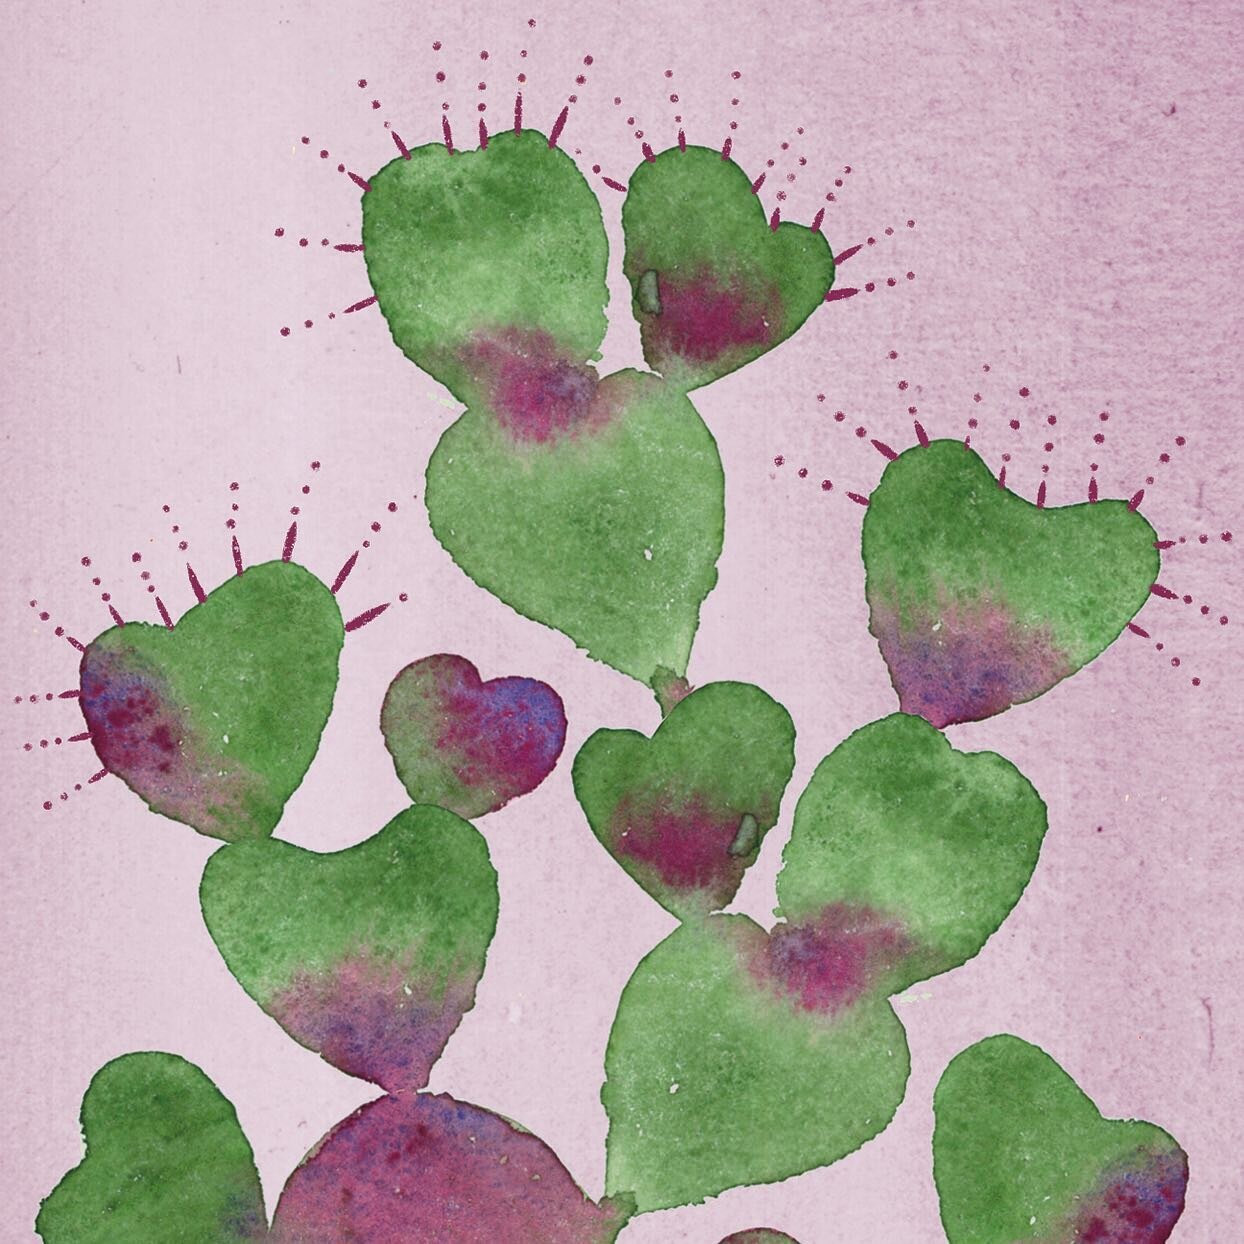 Happy Valentines Day. 💚🌵☘️
.
.
.
.
.
.
.
.
.
.
.
#valentinesday #cactus #heartcactus #love #nature #botanicalart #watercolor #digital